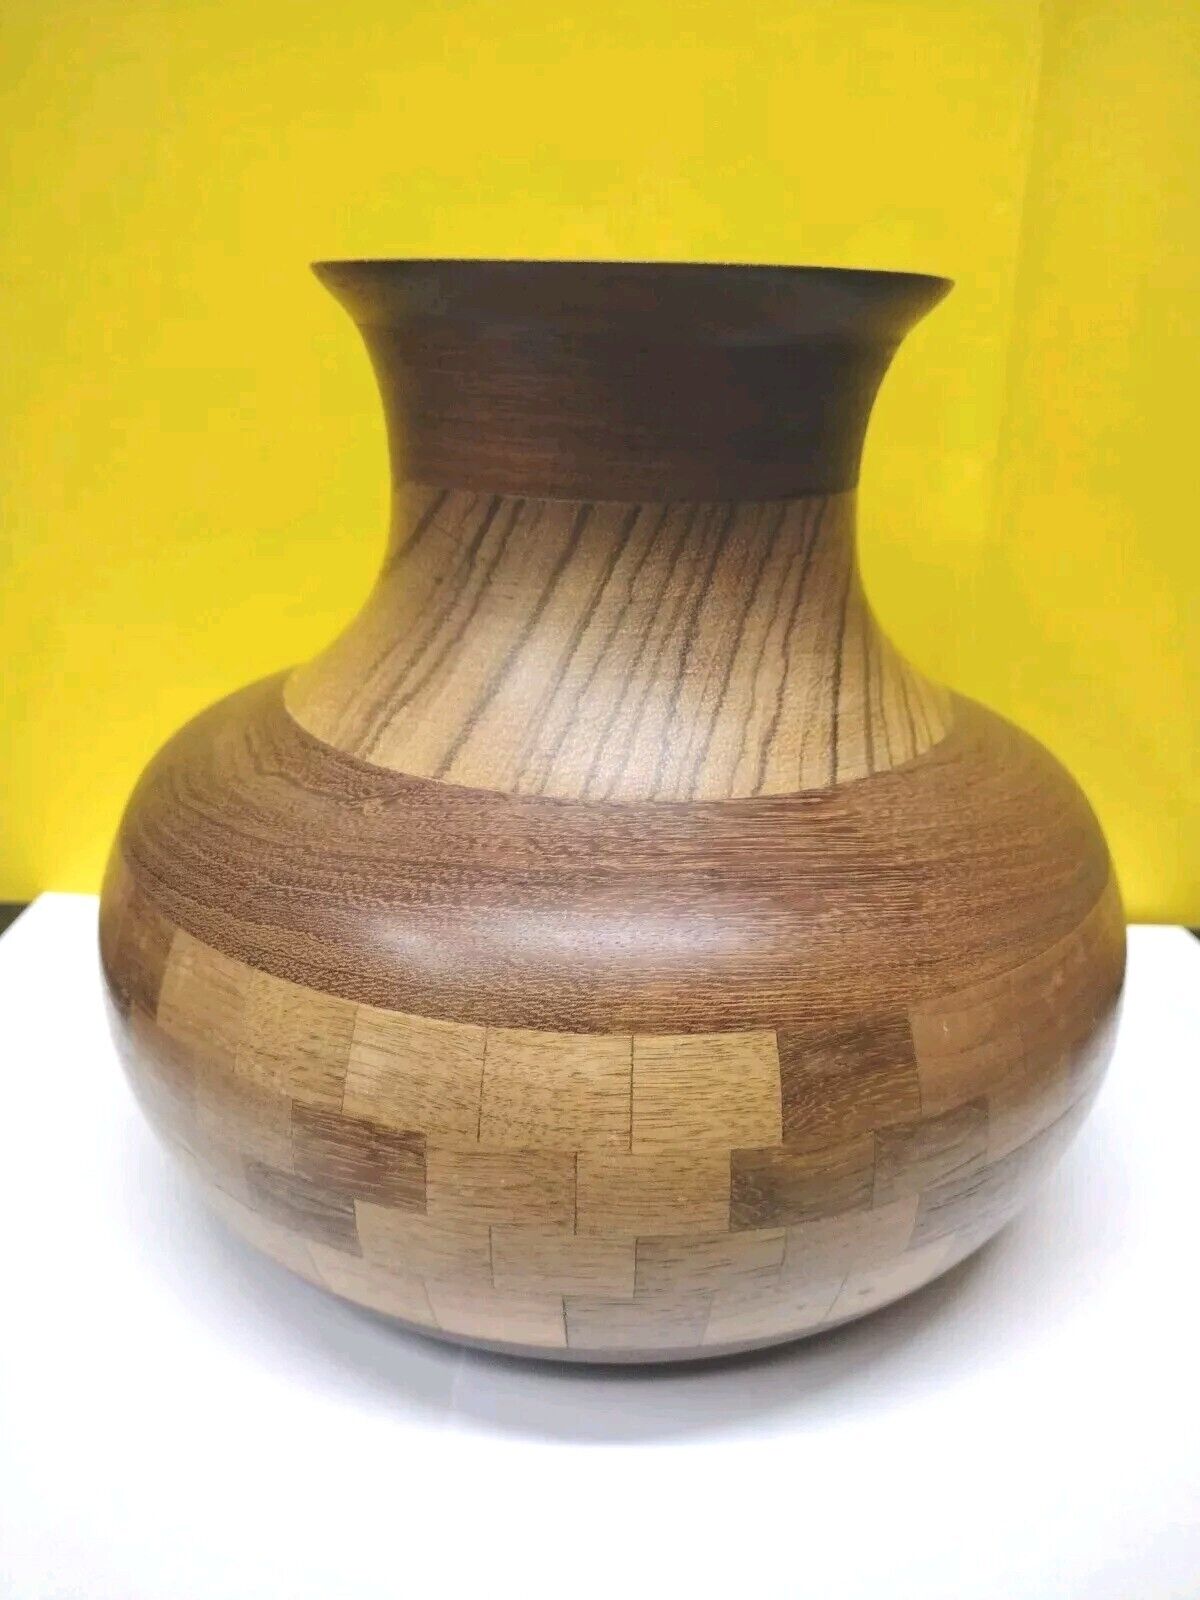 Vintage Segmented Wood Vase Handcrafted Lathe Turned Signed by Artist Art 